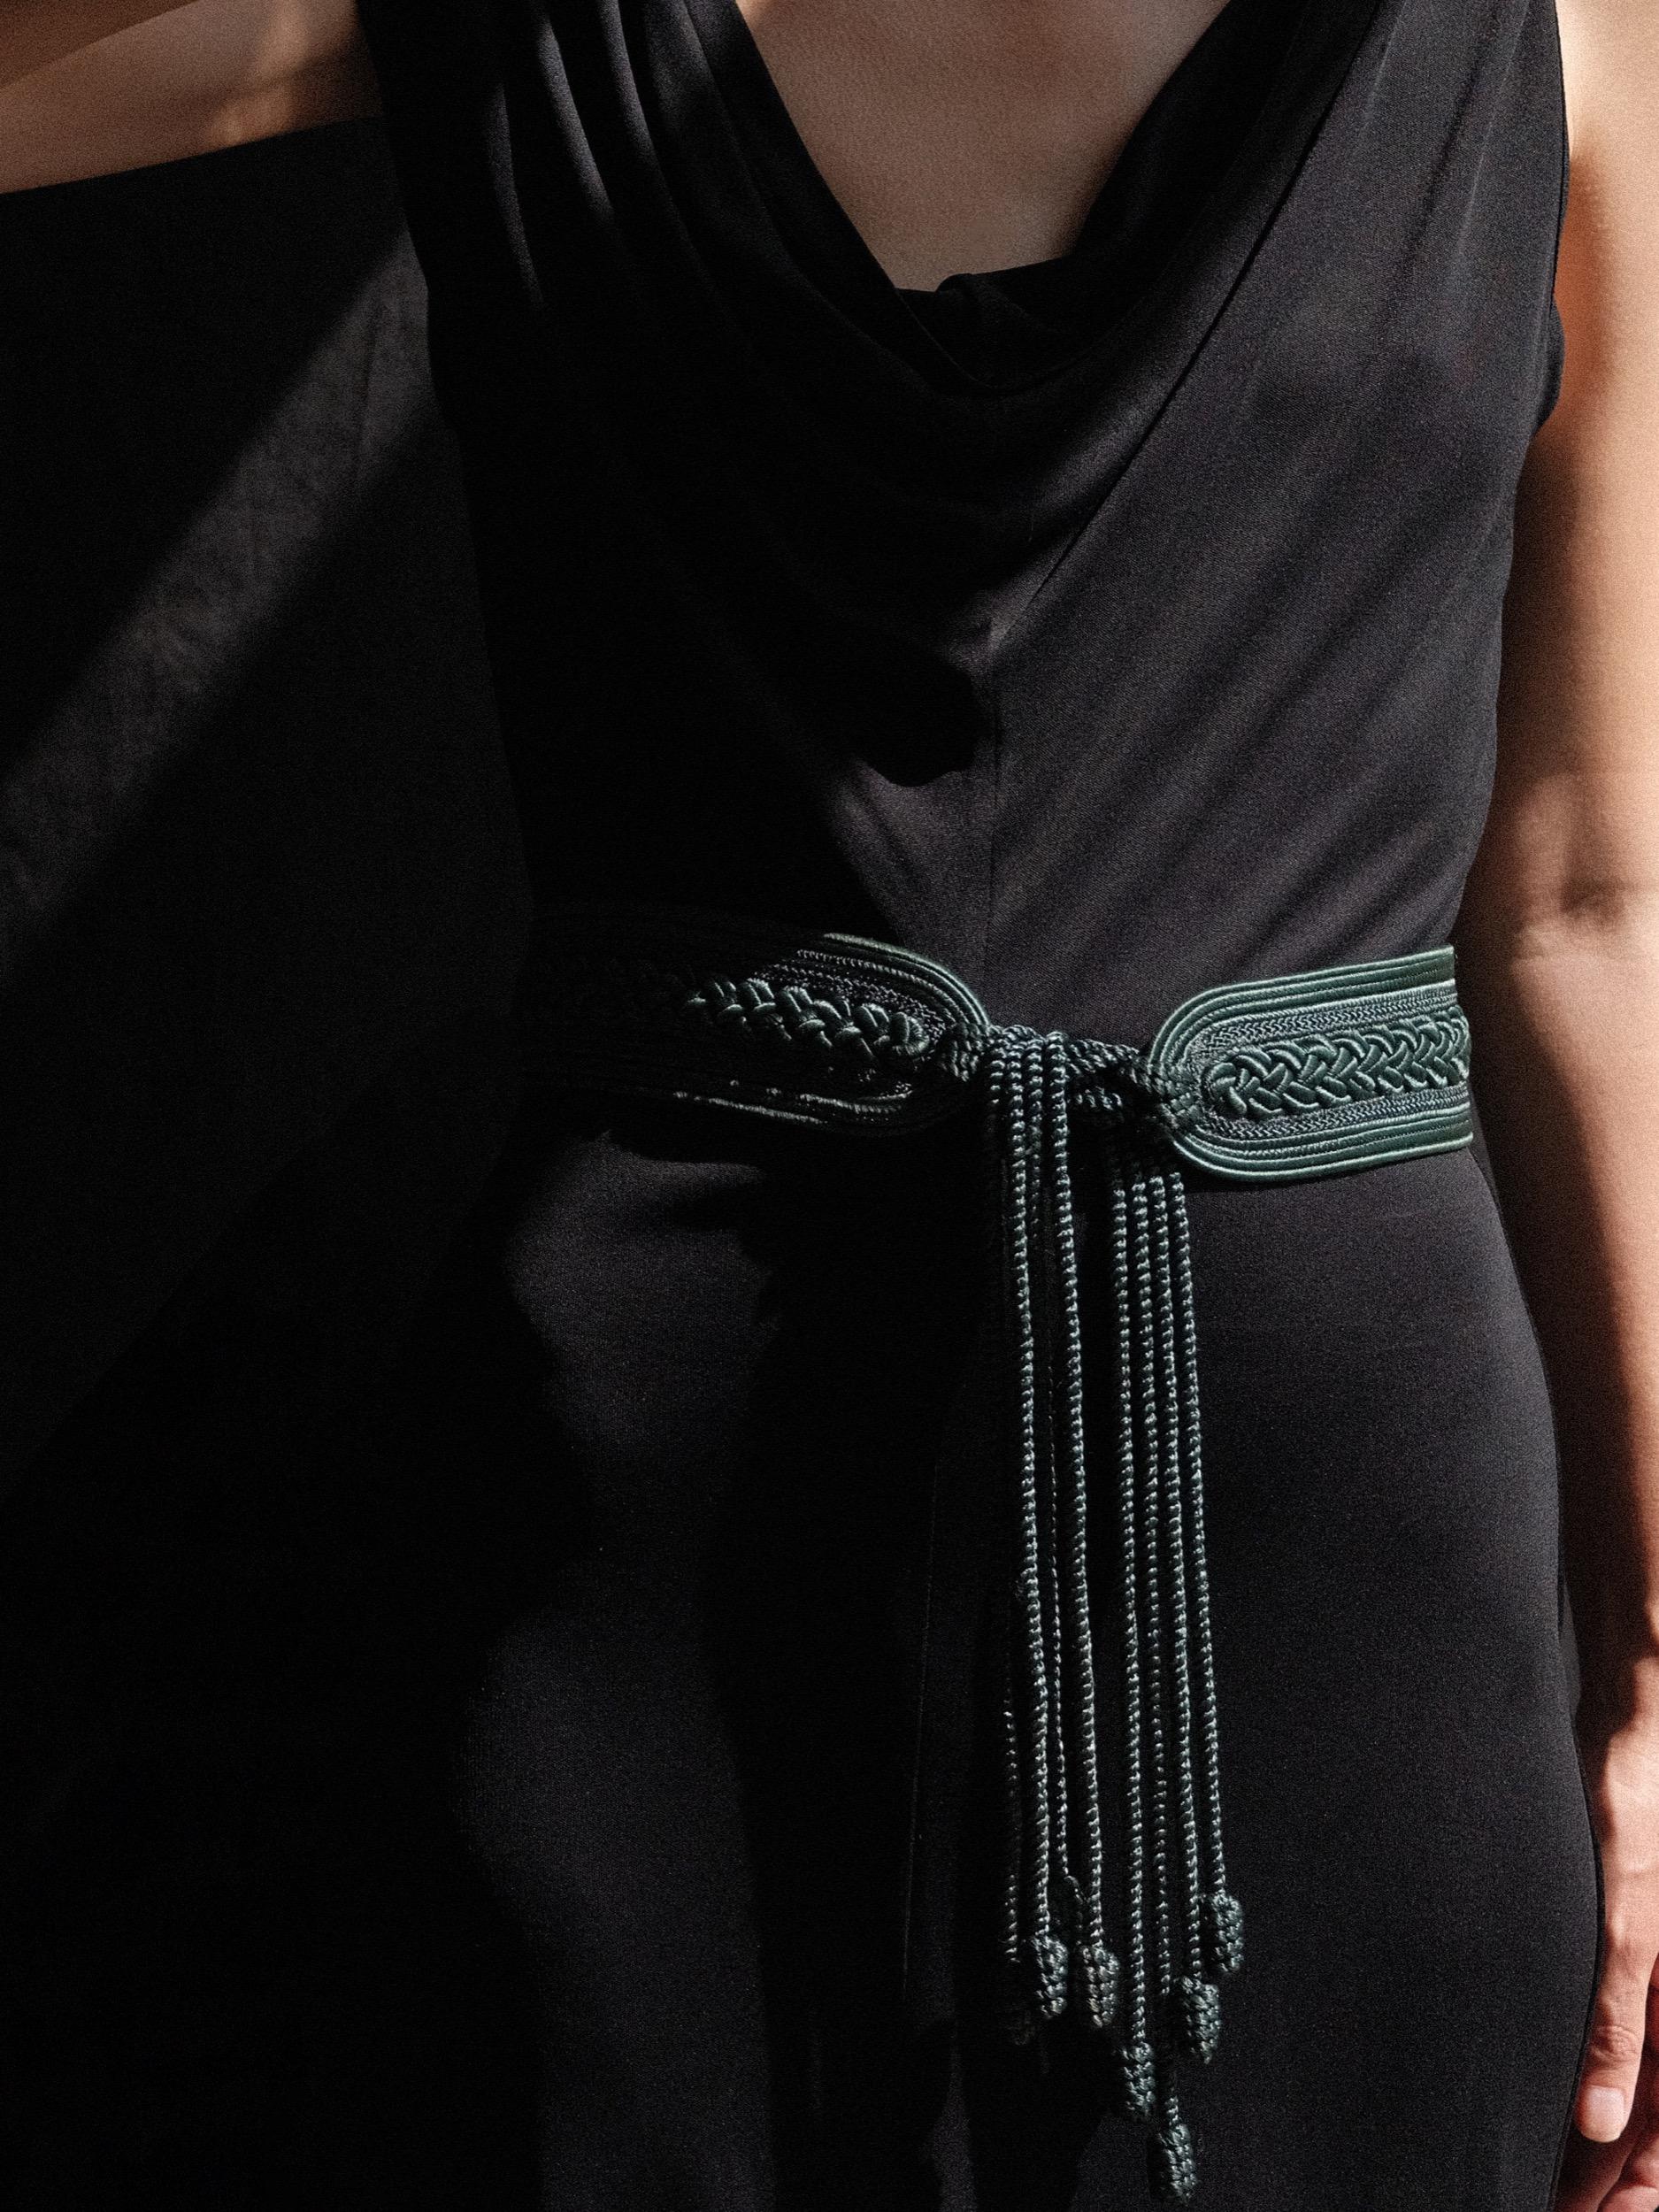 Black Nina Ricci Passamenterie Belt with Tassels Dark Green 1990's For Sale